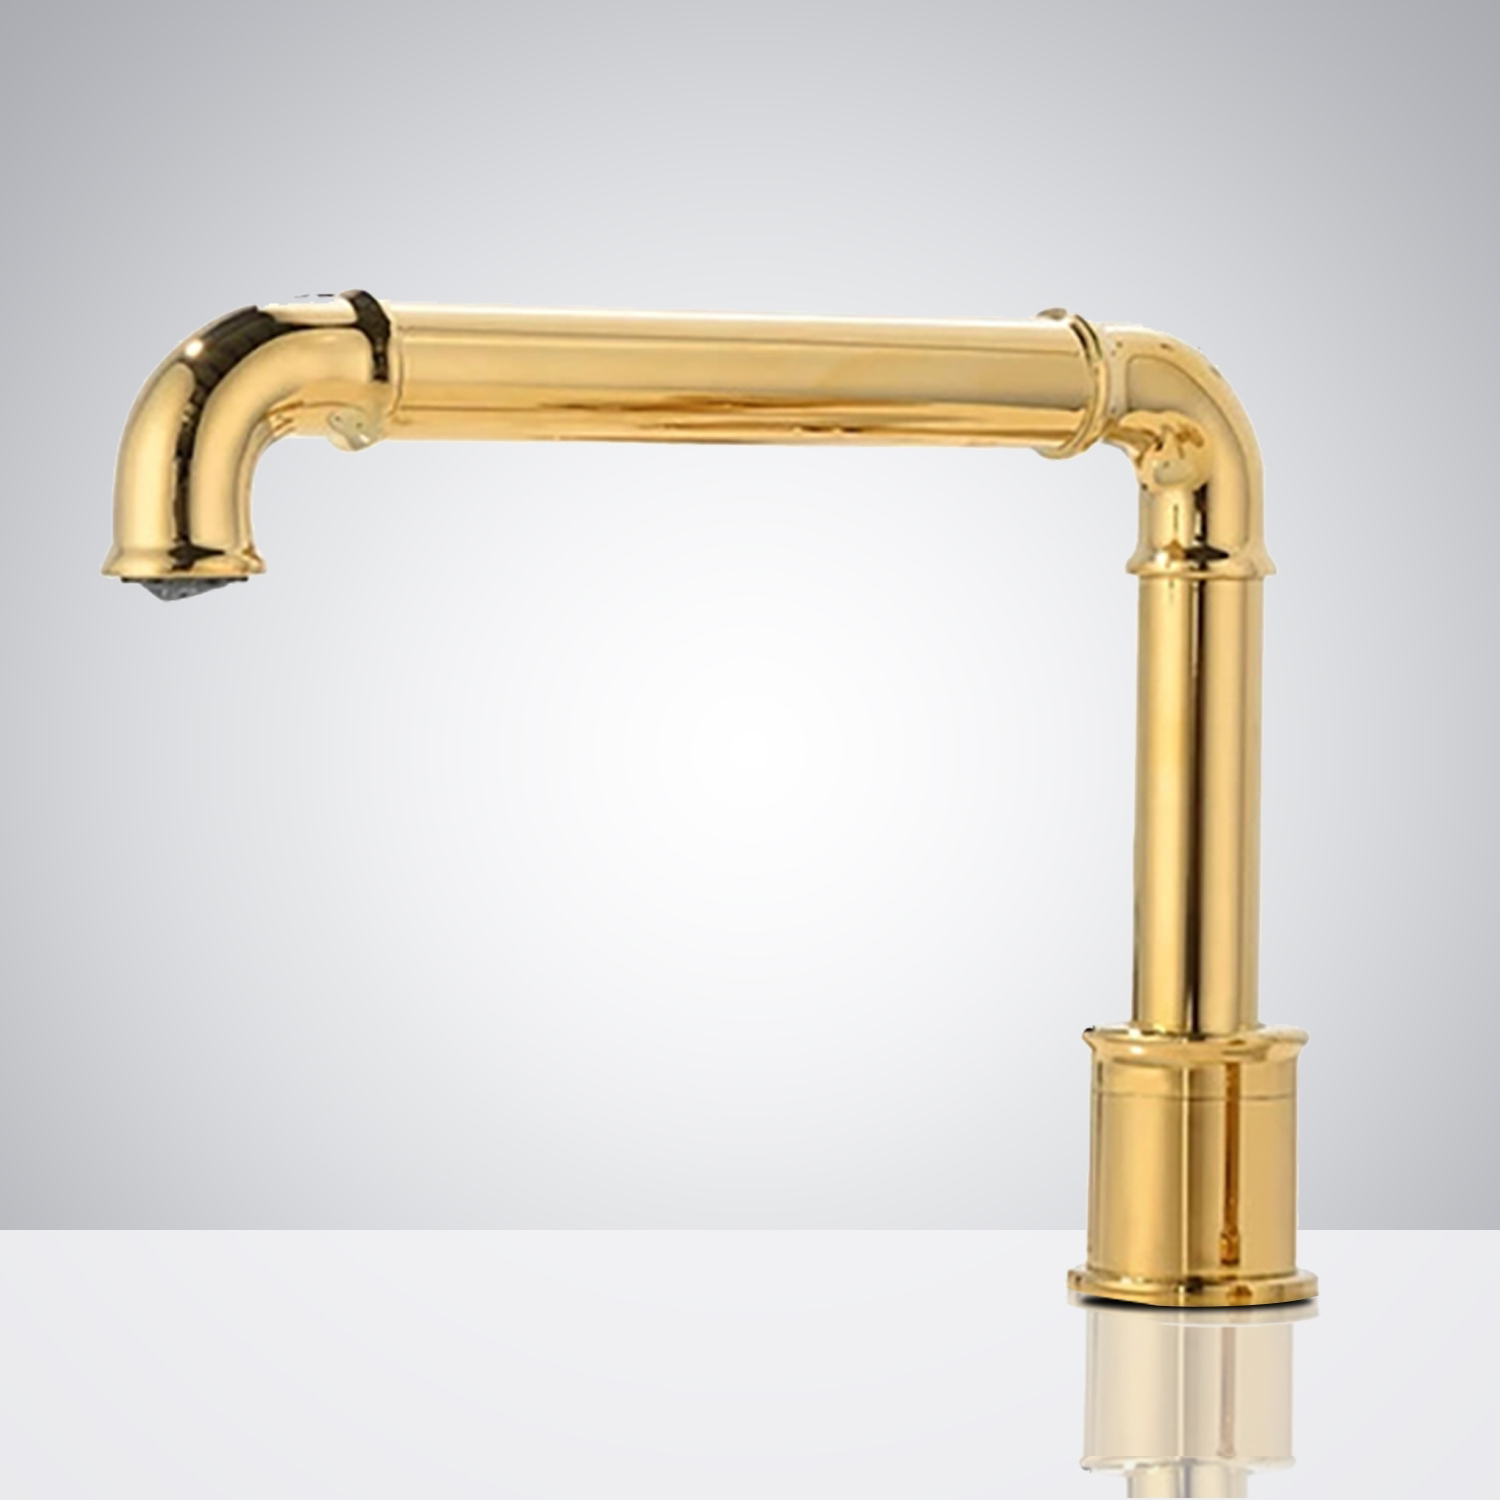 Fontana Commercial Gold Automatic Sensor Hands Free Faucet